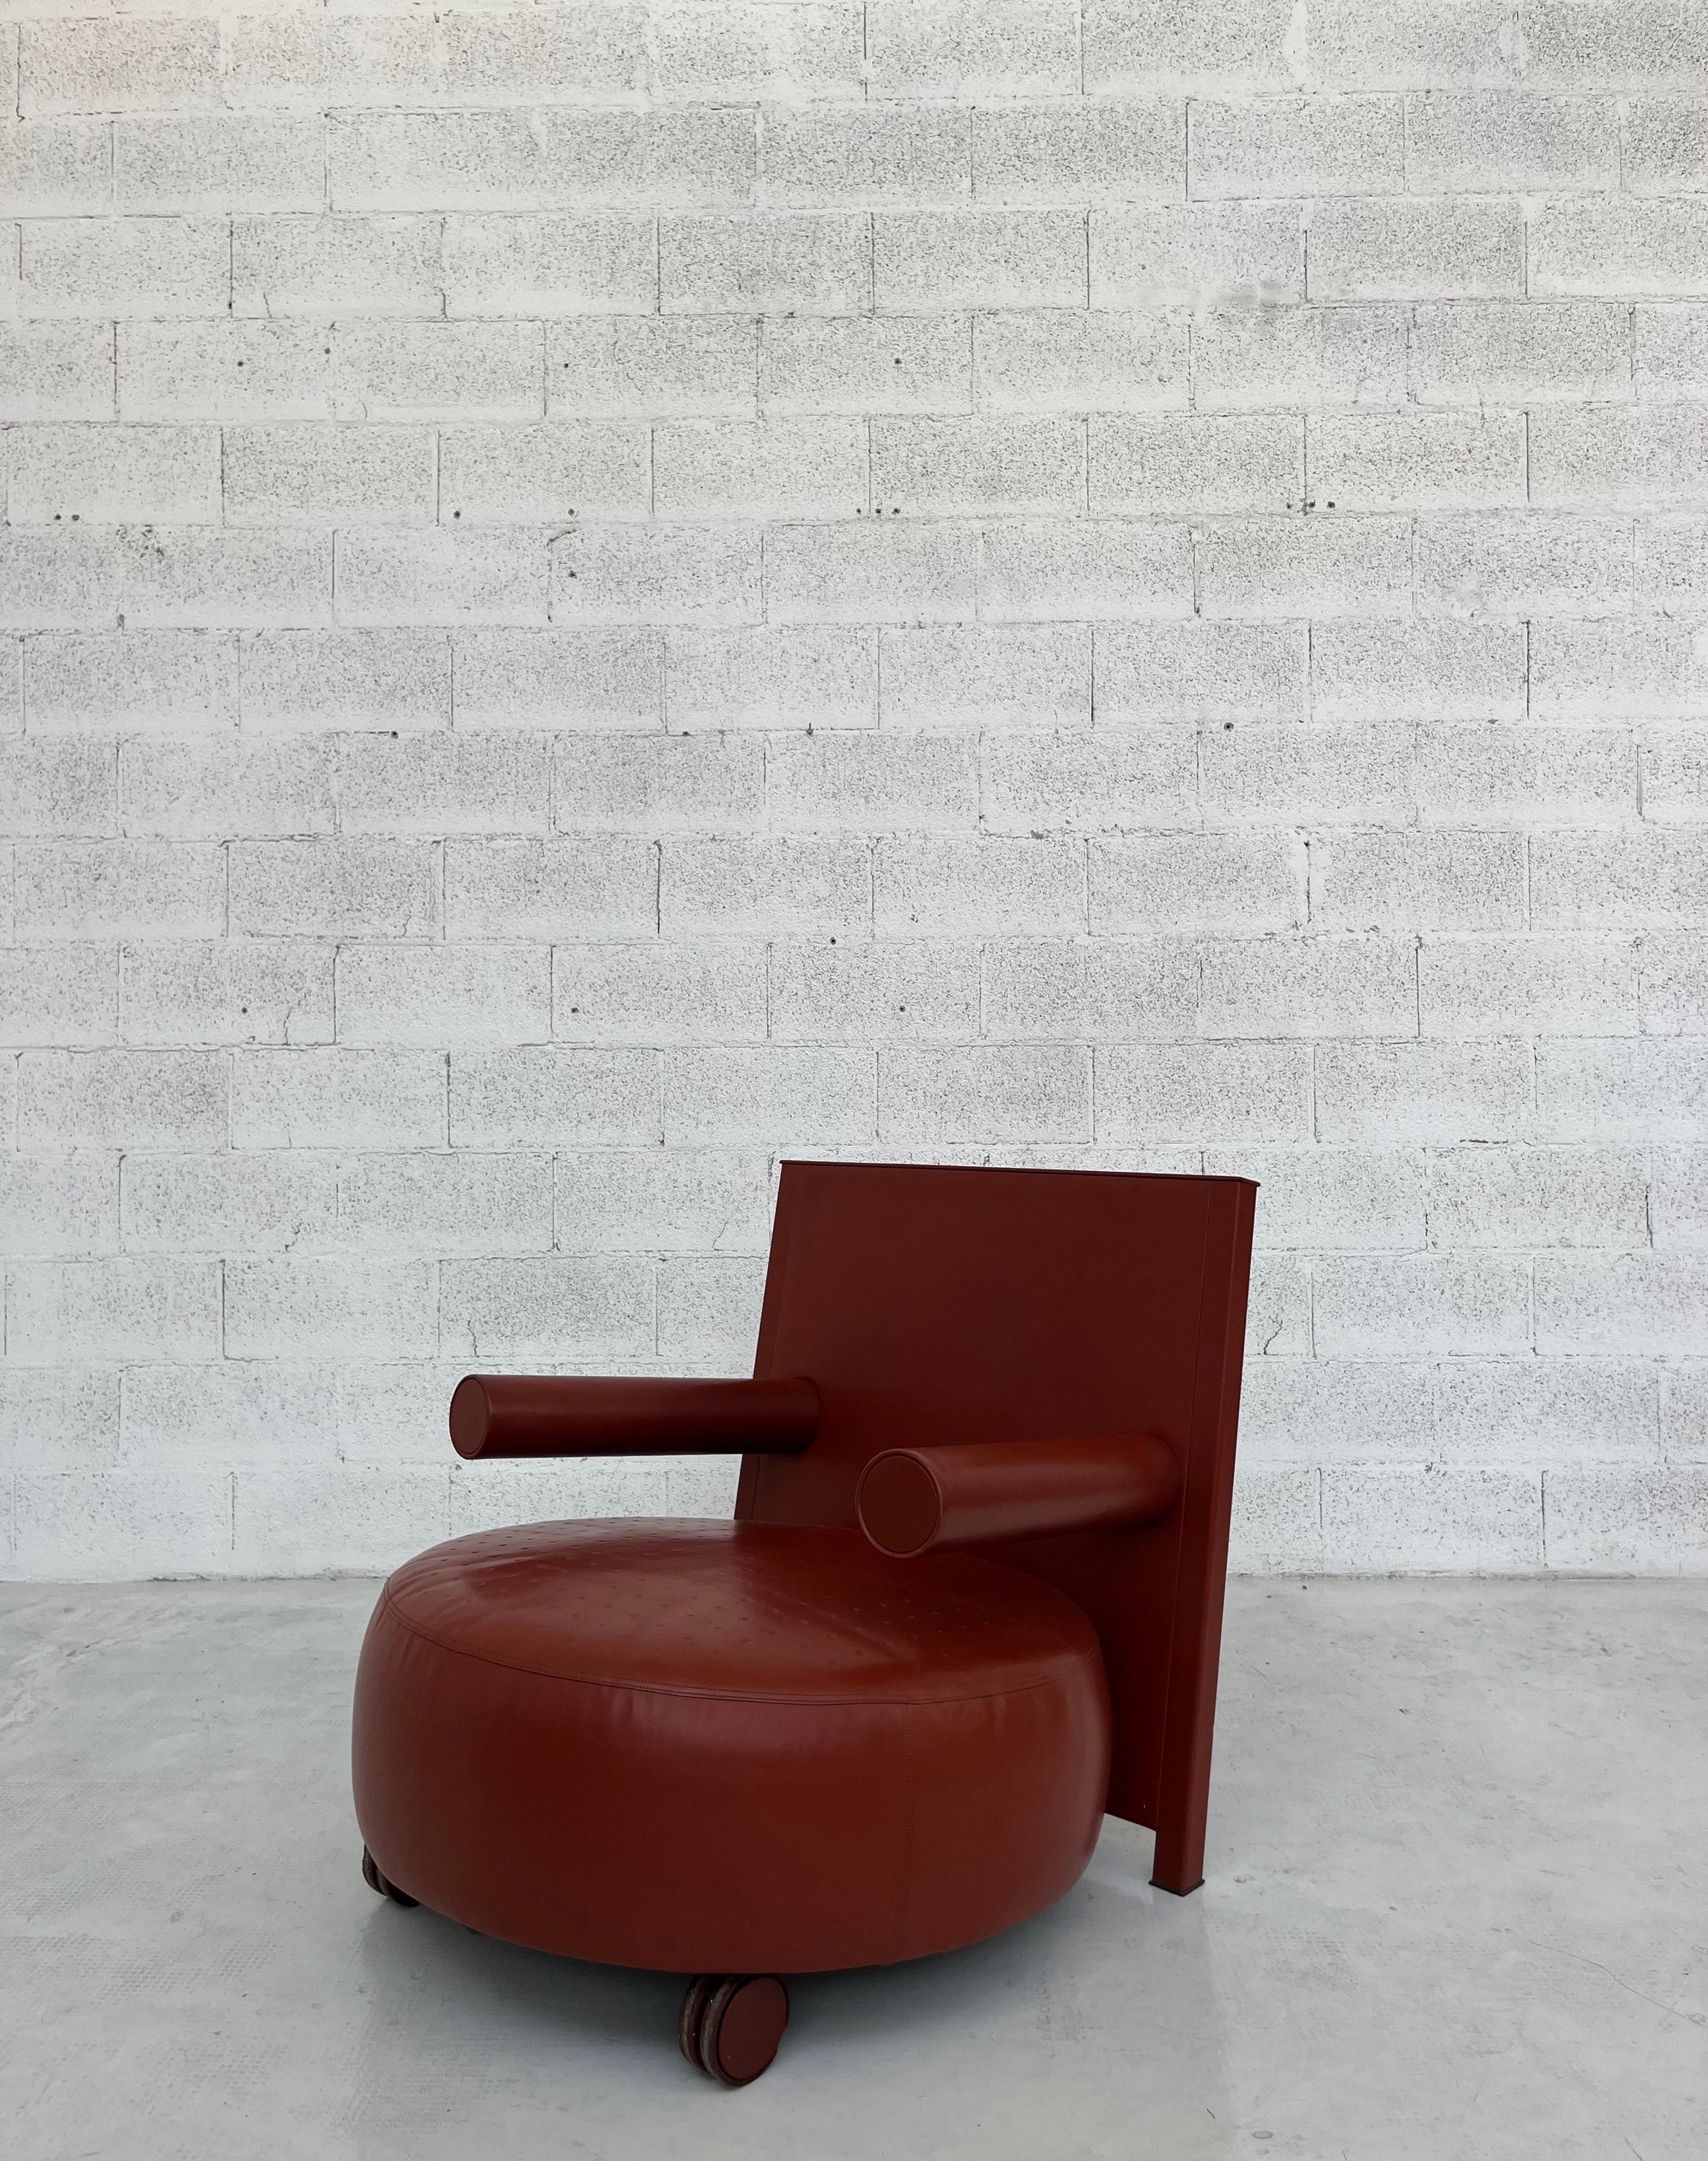 Mid-Century Modern Baisity leather armchair by Antonio Citterio for B&B Italia 80s, 90s